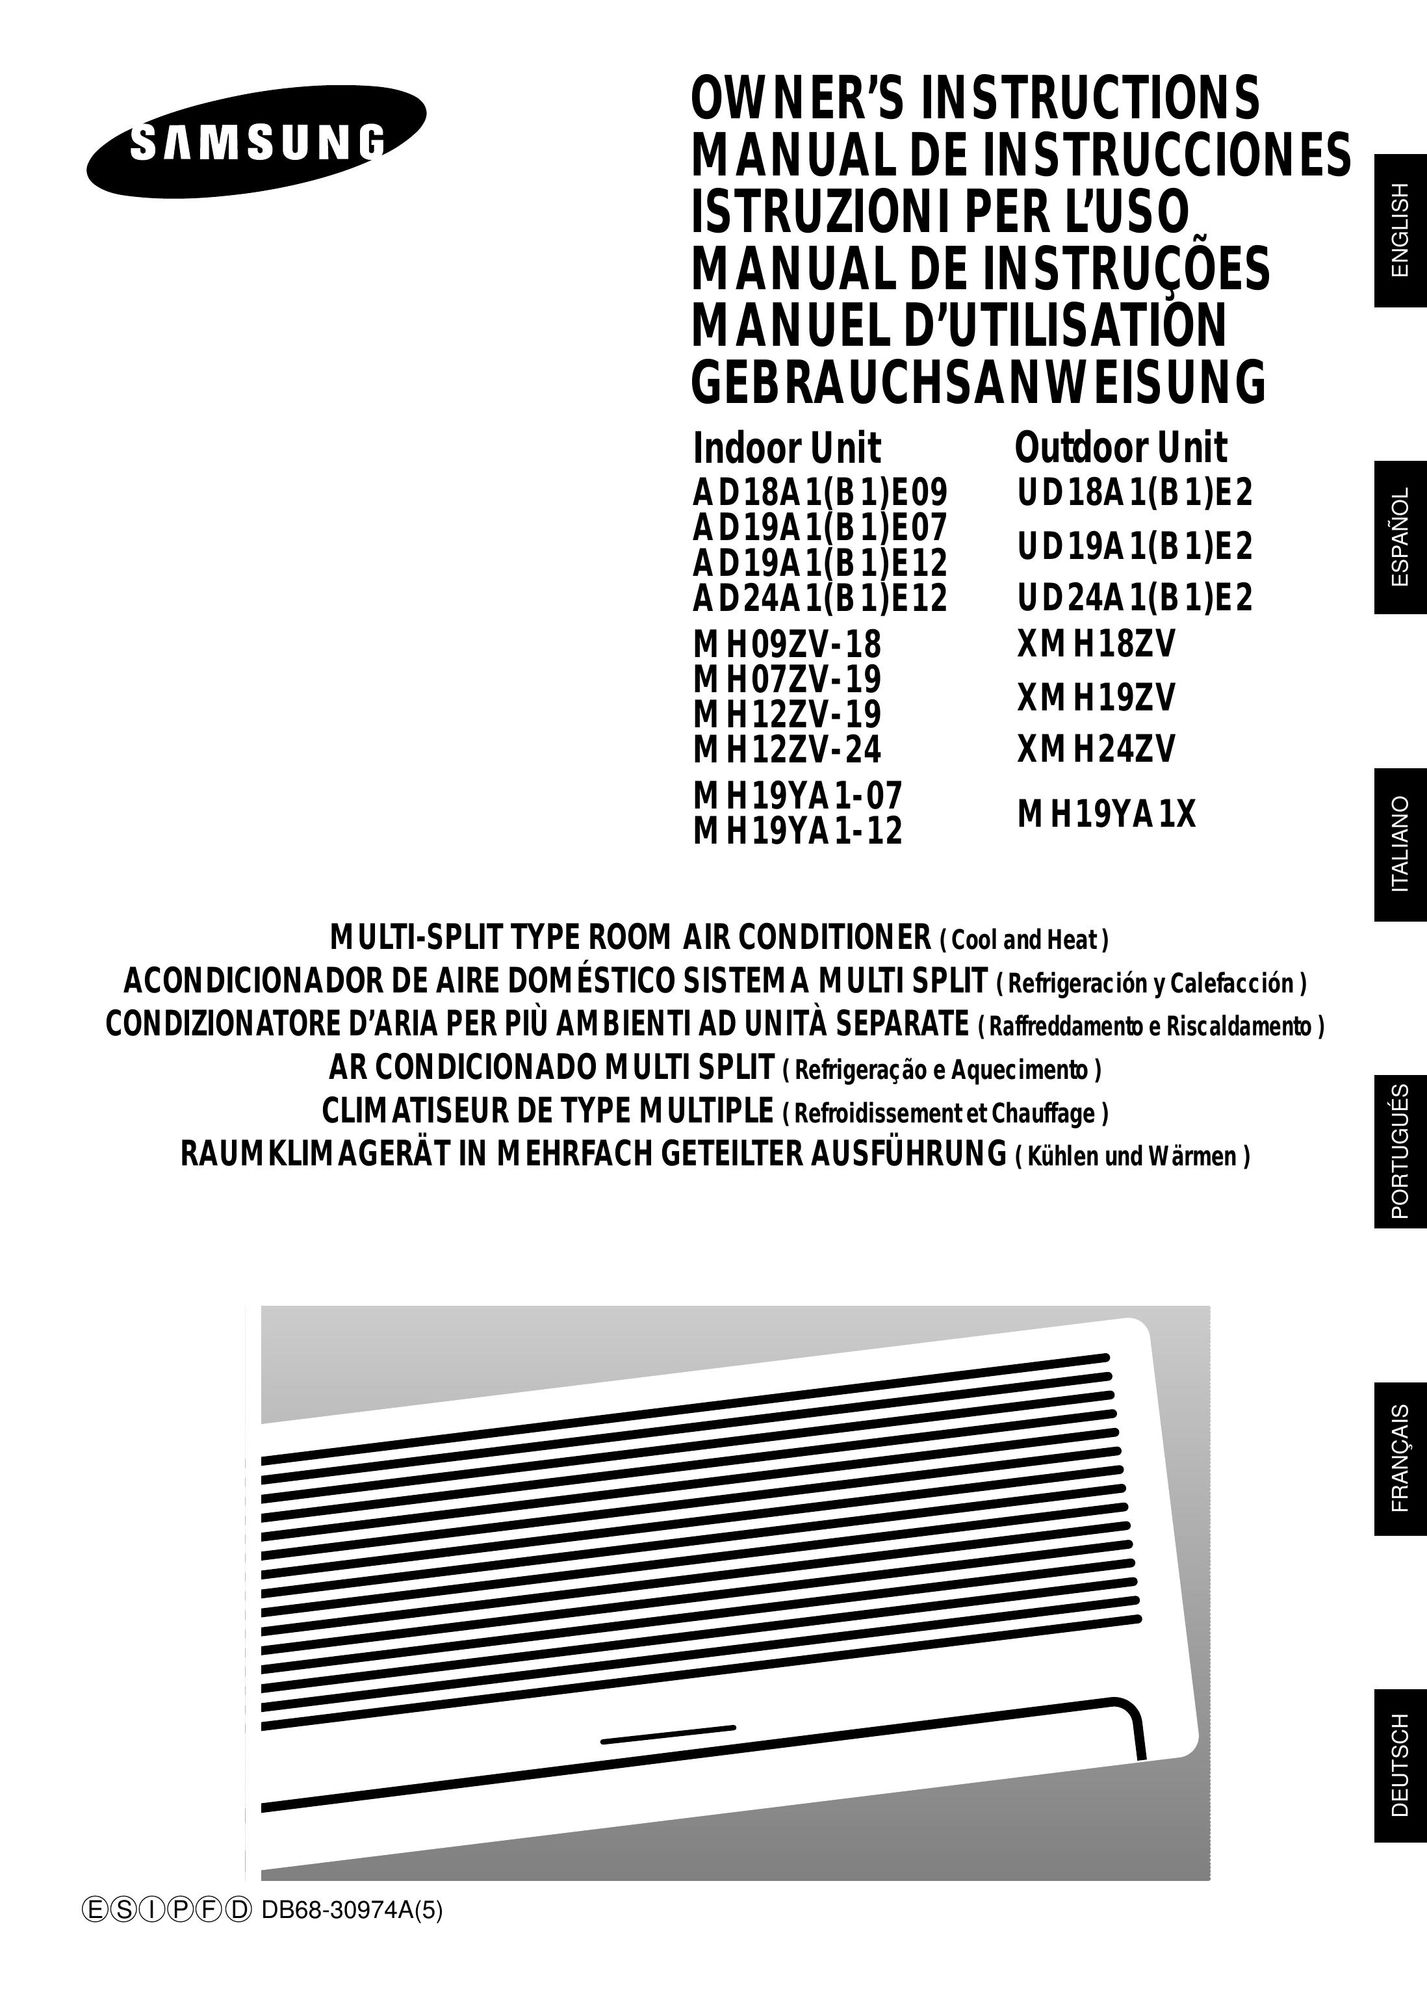 Samsung AD19A1(B1)E12 Air Conditioner User Manual